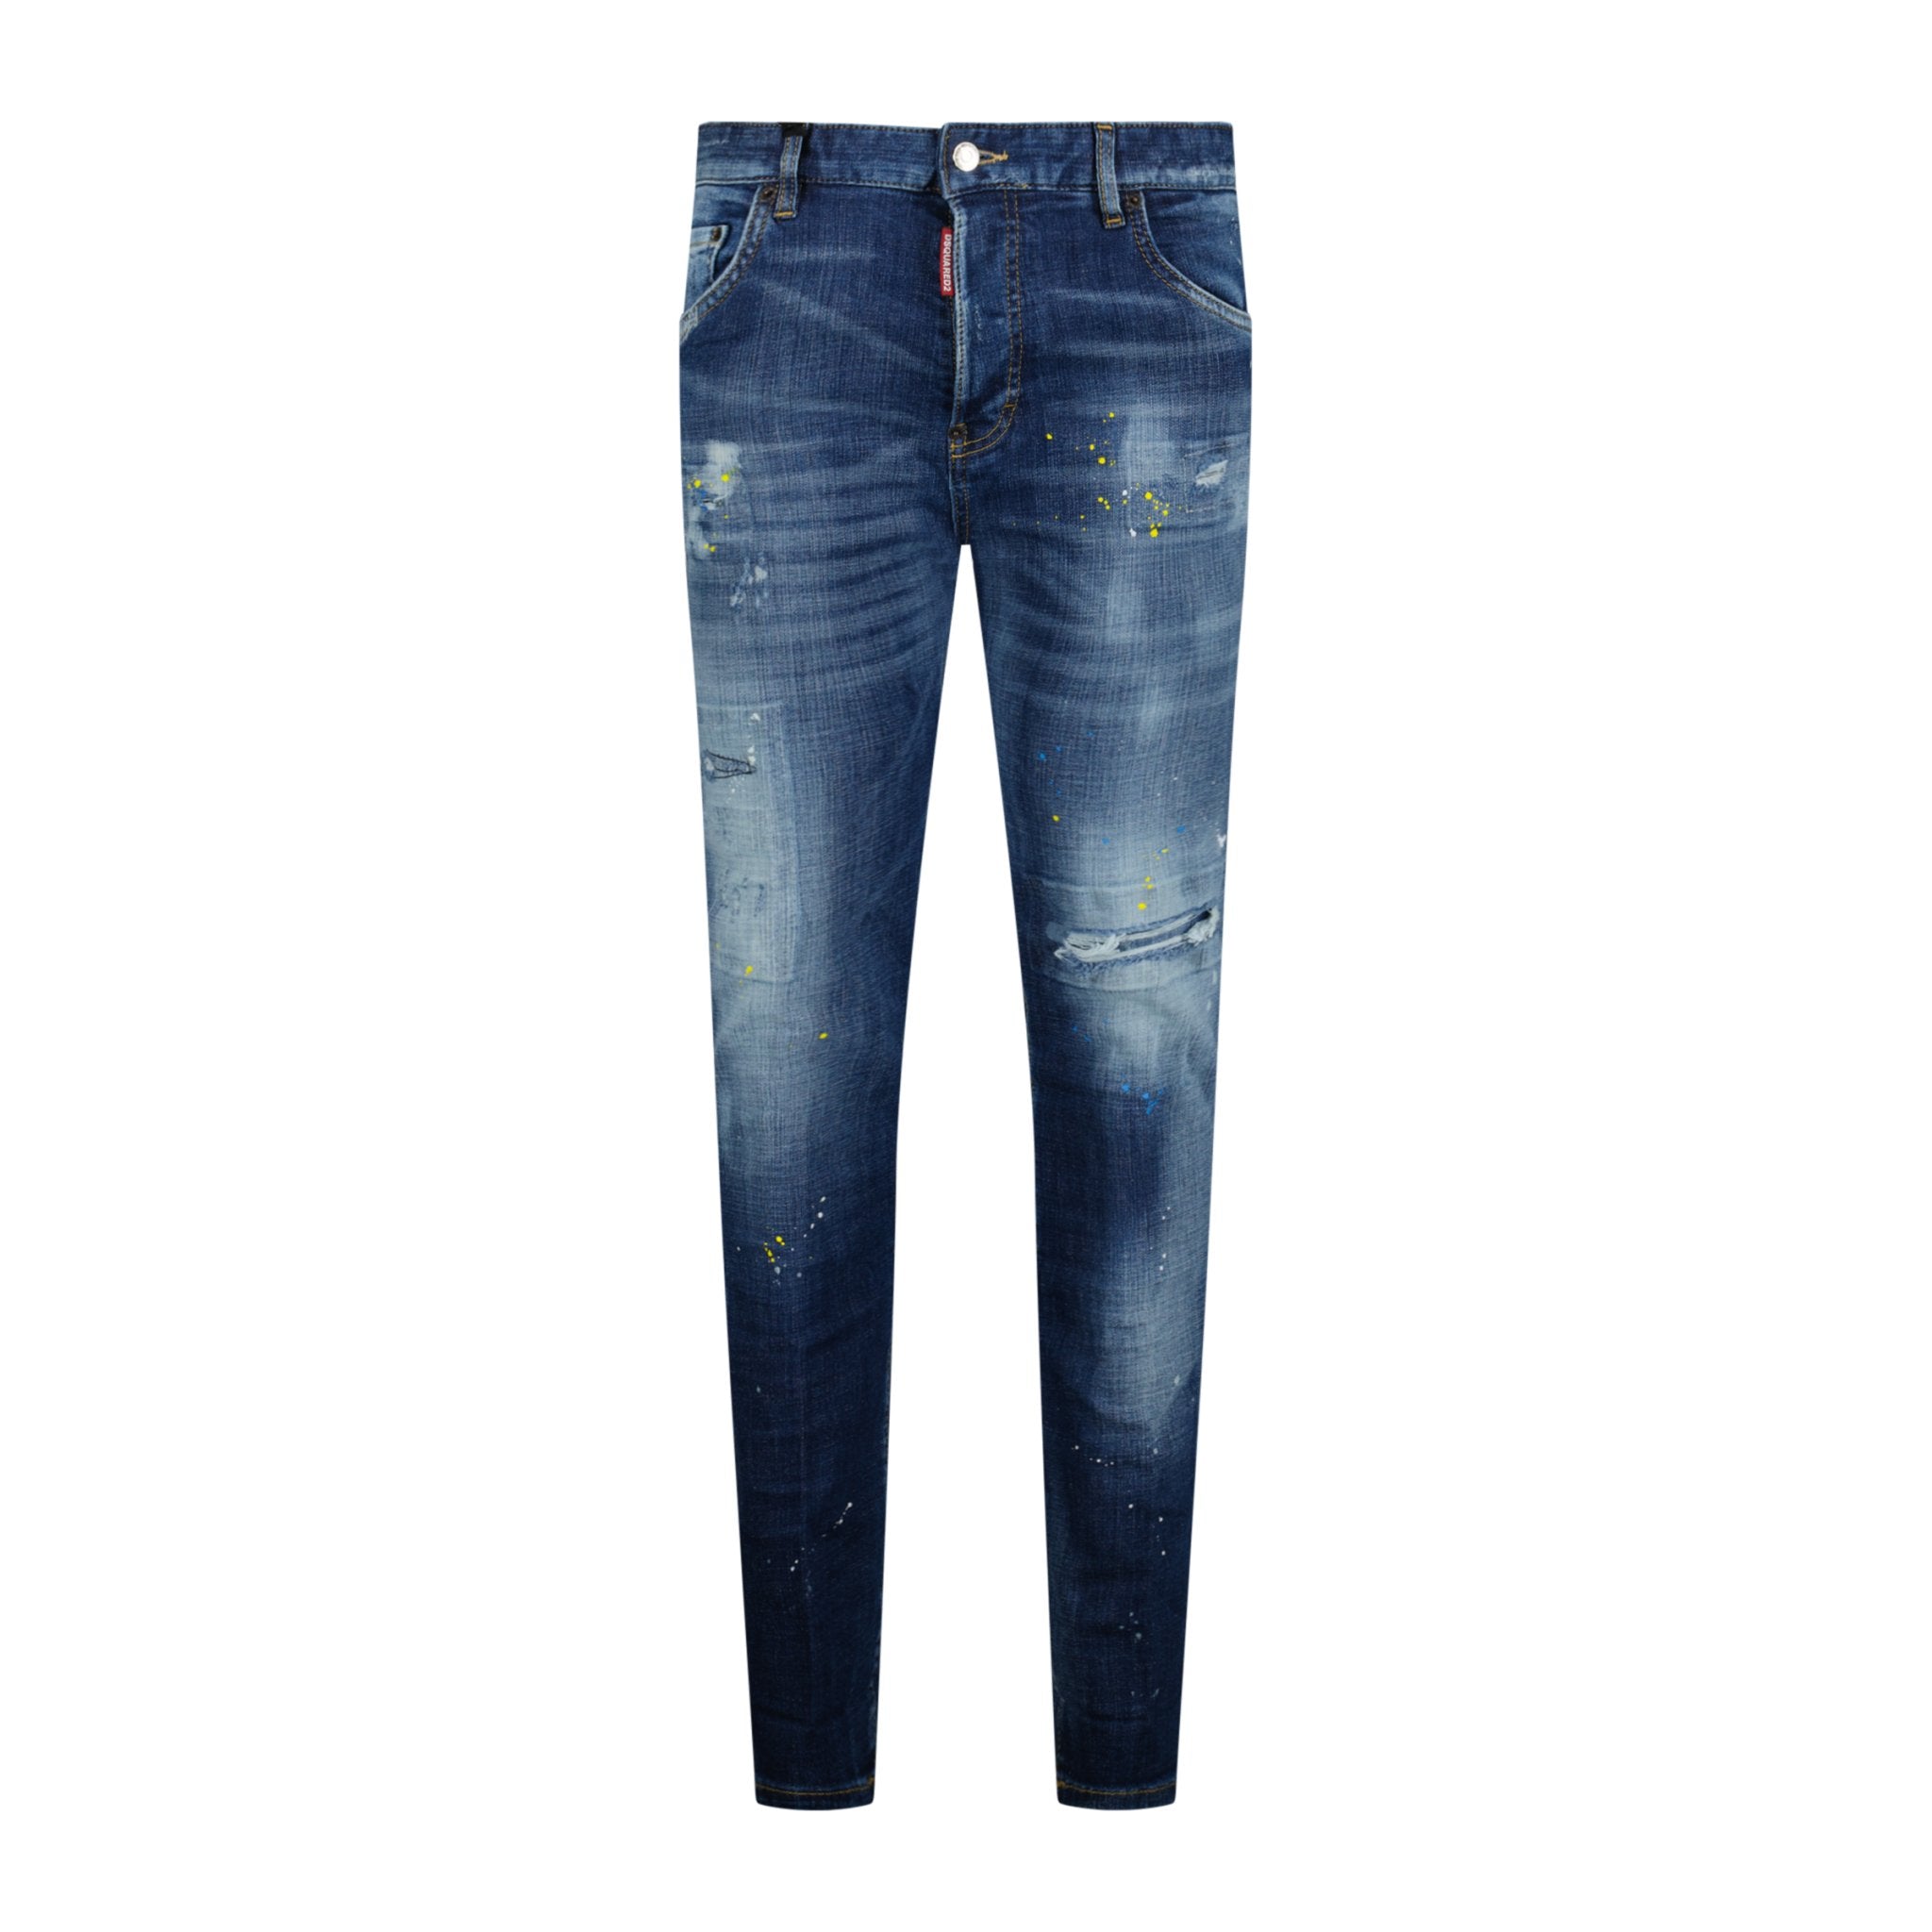 DSquared2 Dean Caten 'Cool Guy' Paint Splatter Slim Fit Jeans Blue